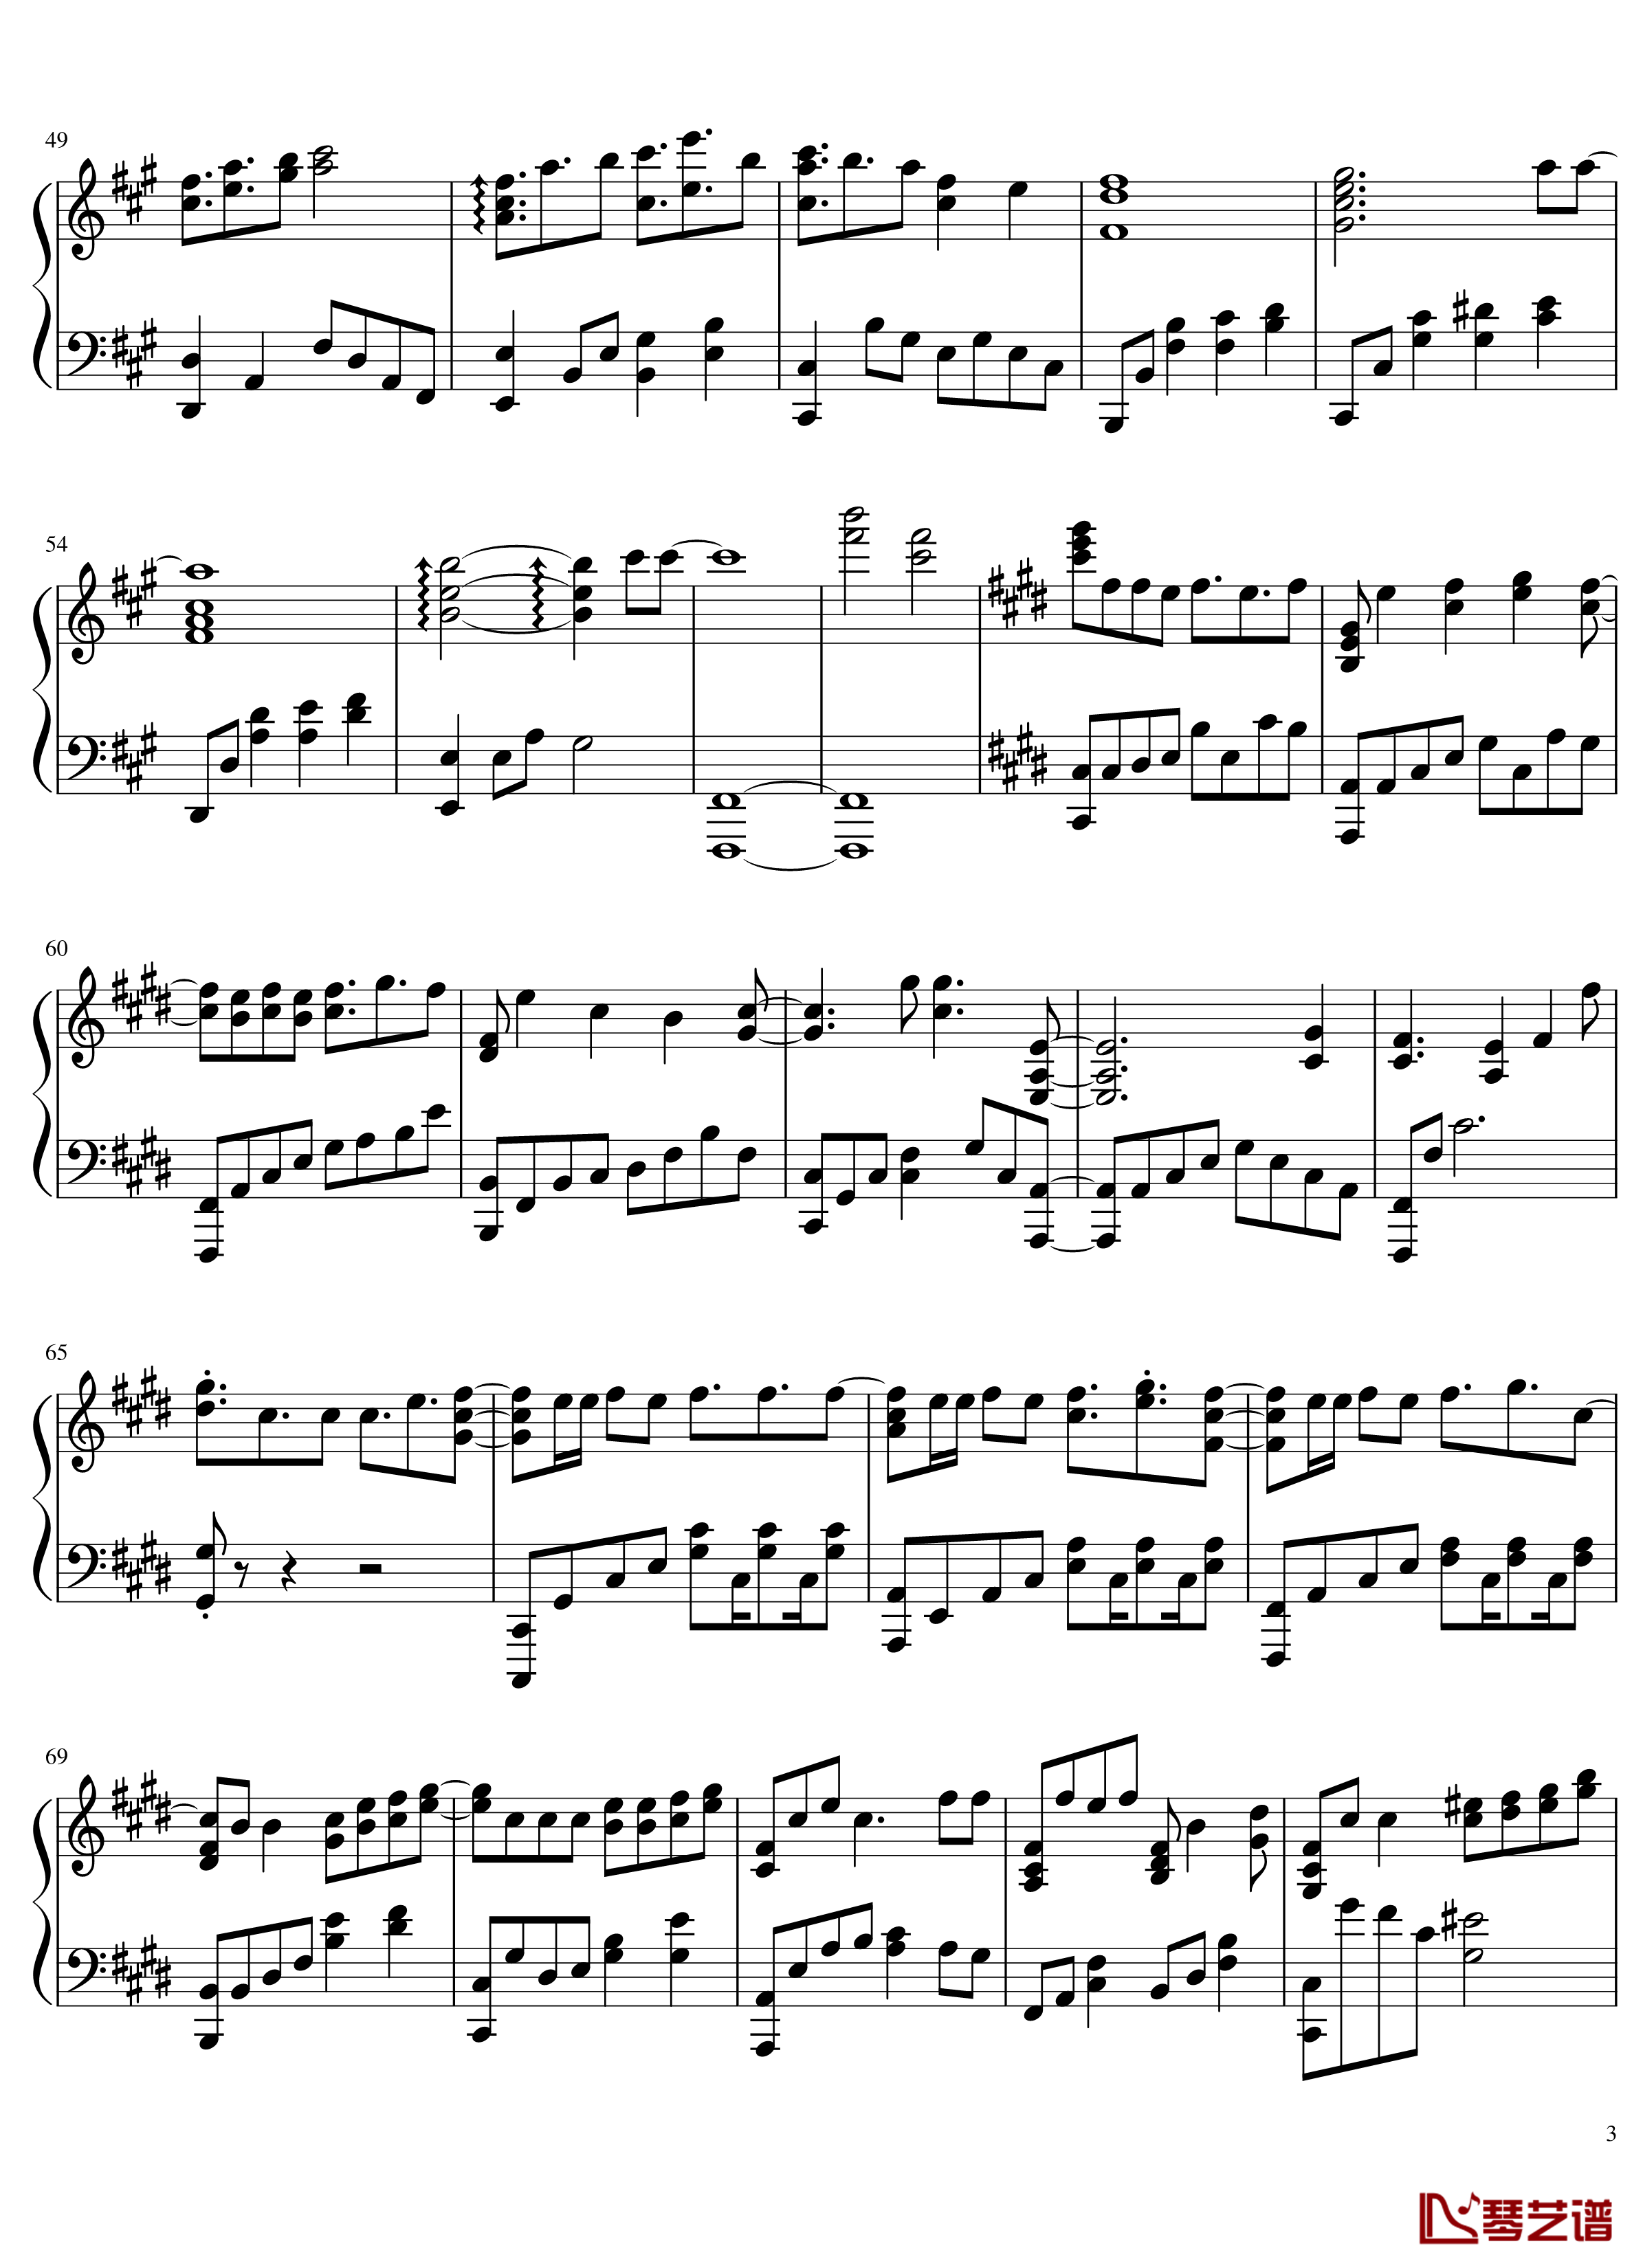 There is a reason钢琴谱-nogamenolife3